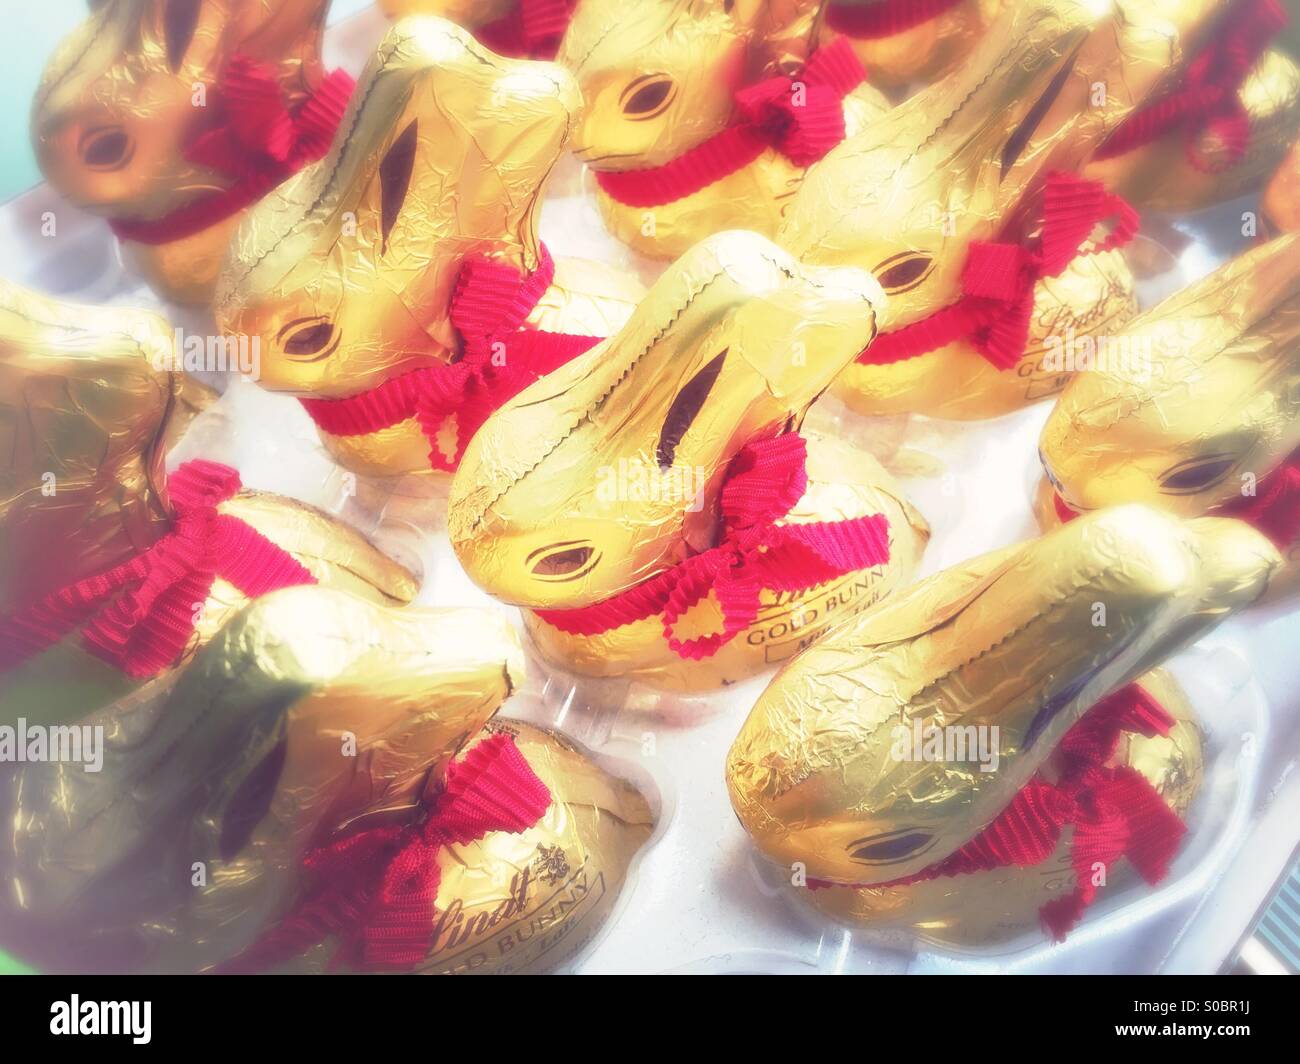 Chocolate Easter bunnies Stock Photo